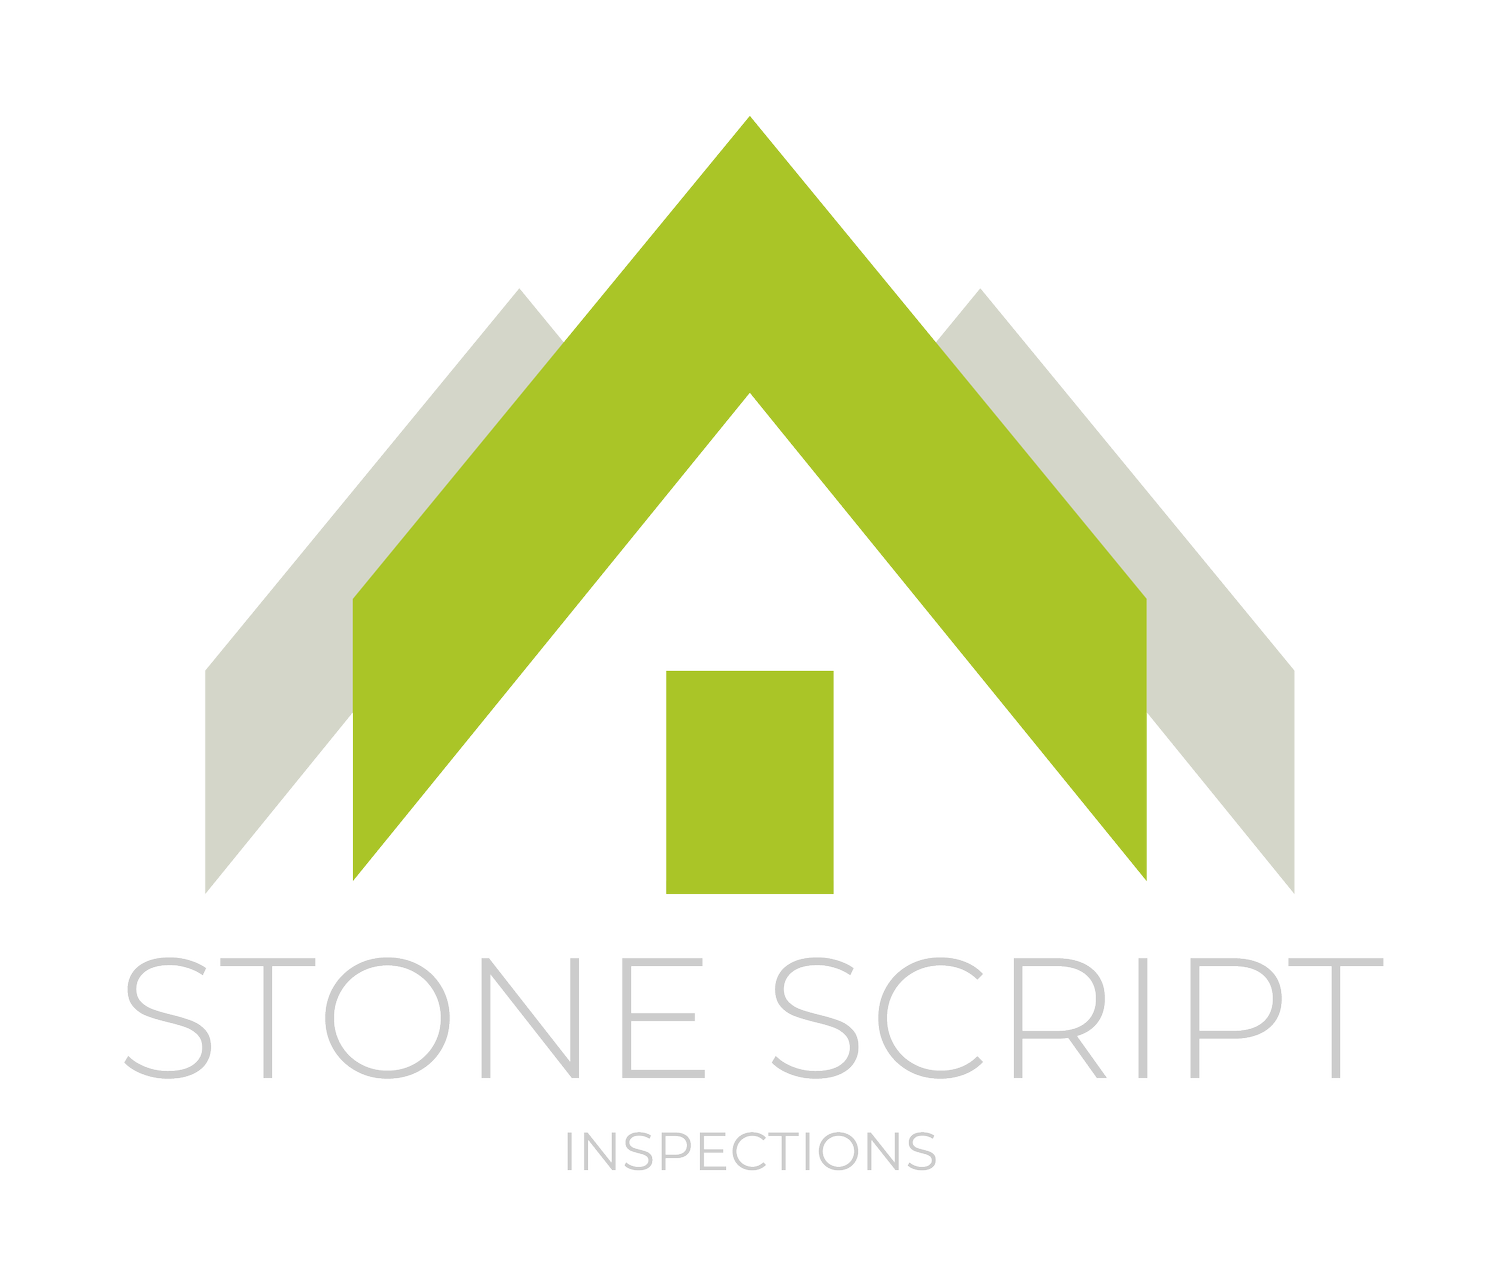 Stone Script Inspections